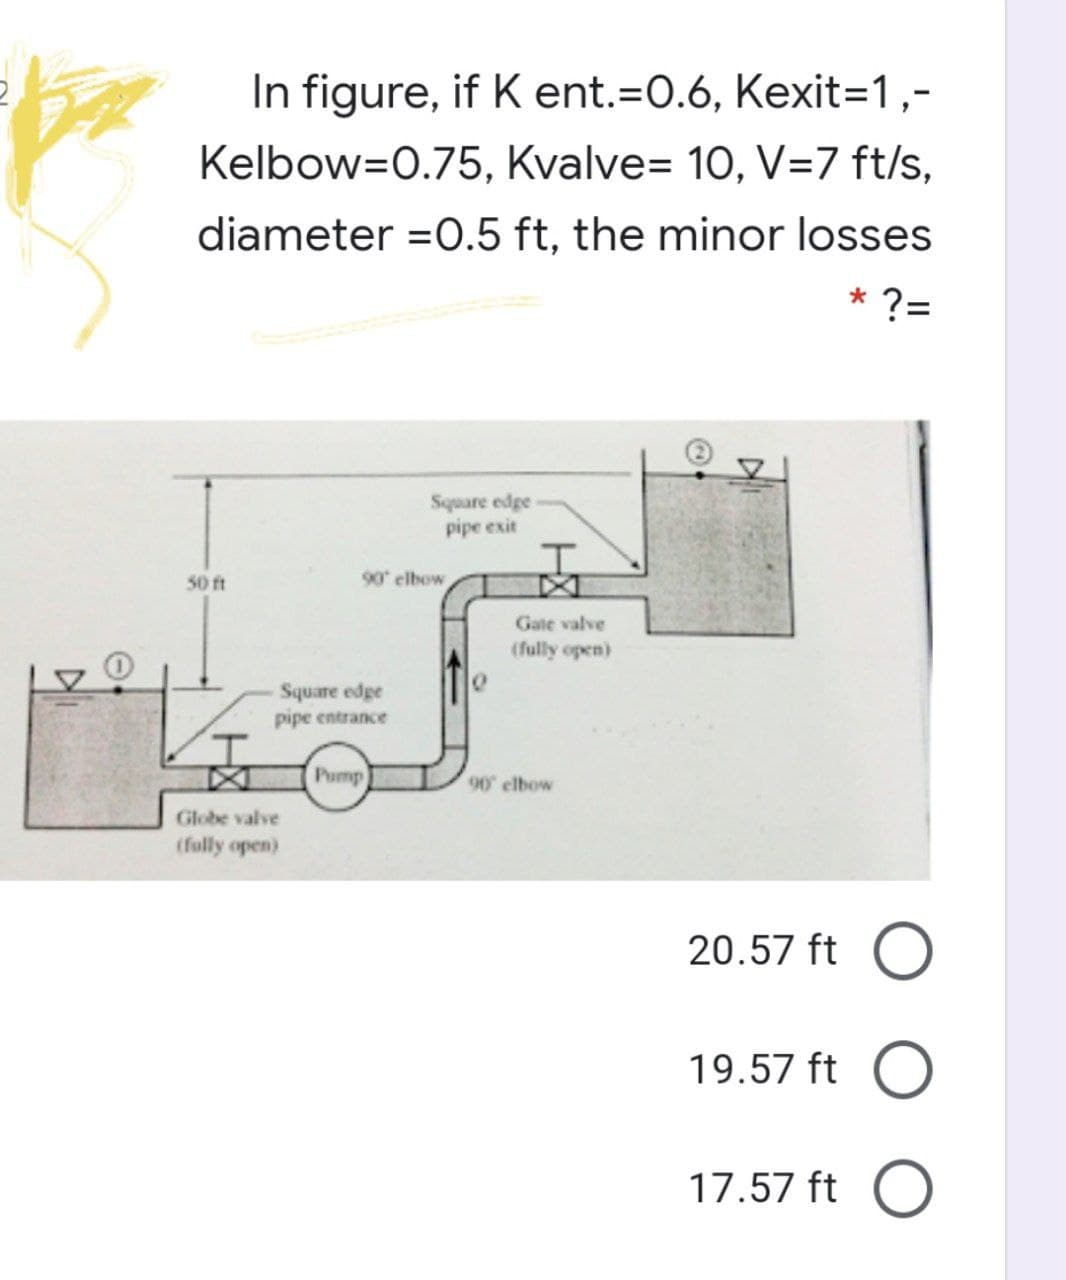 In figure, if K ent.=0.6, Kexit=1,-
Kelbow=0.75, Kvalve= 10, V=7 ft/s,
diameter =0.5 ft. the minor losses
* ?=
Square edge
pipe exit
50 ft
90 elbow
Gate valve
(fully open)
Square edge
pipe entrance
Pump
90 elbow
Globe valve
(folly open)
20.57 ft O
19.57 ft O
17.57 ft O
